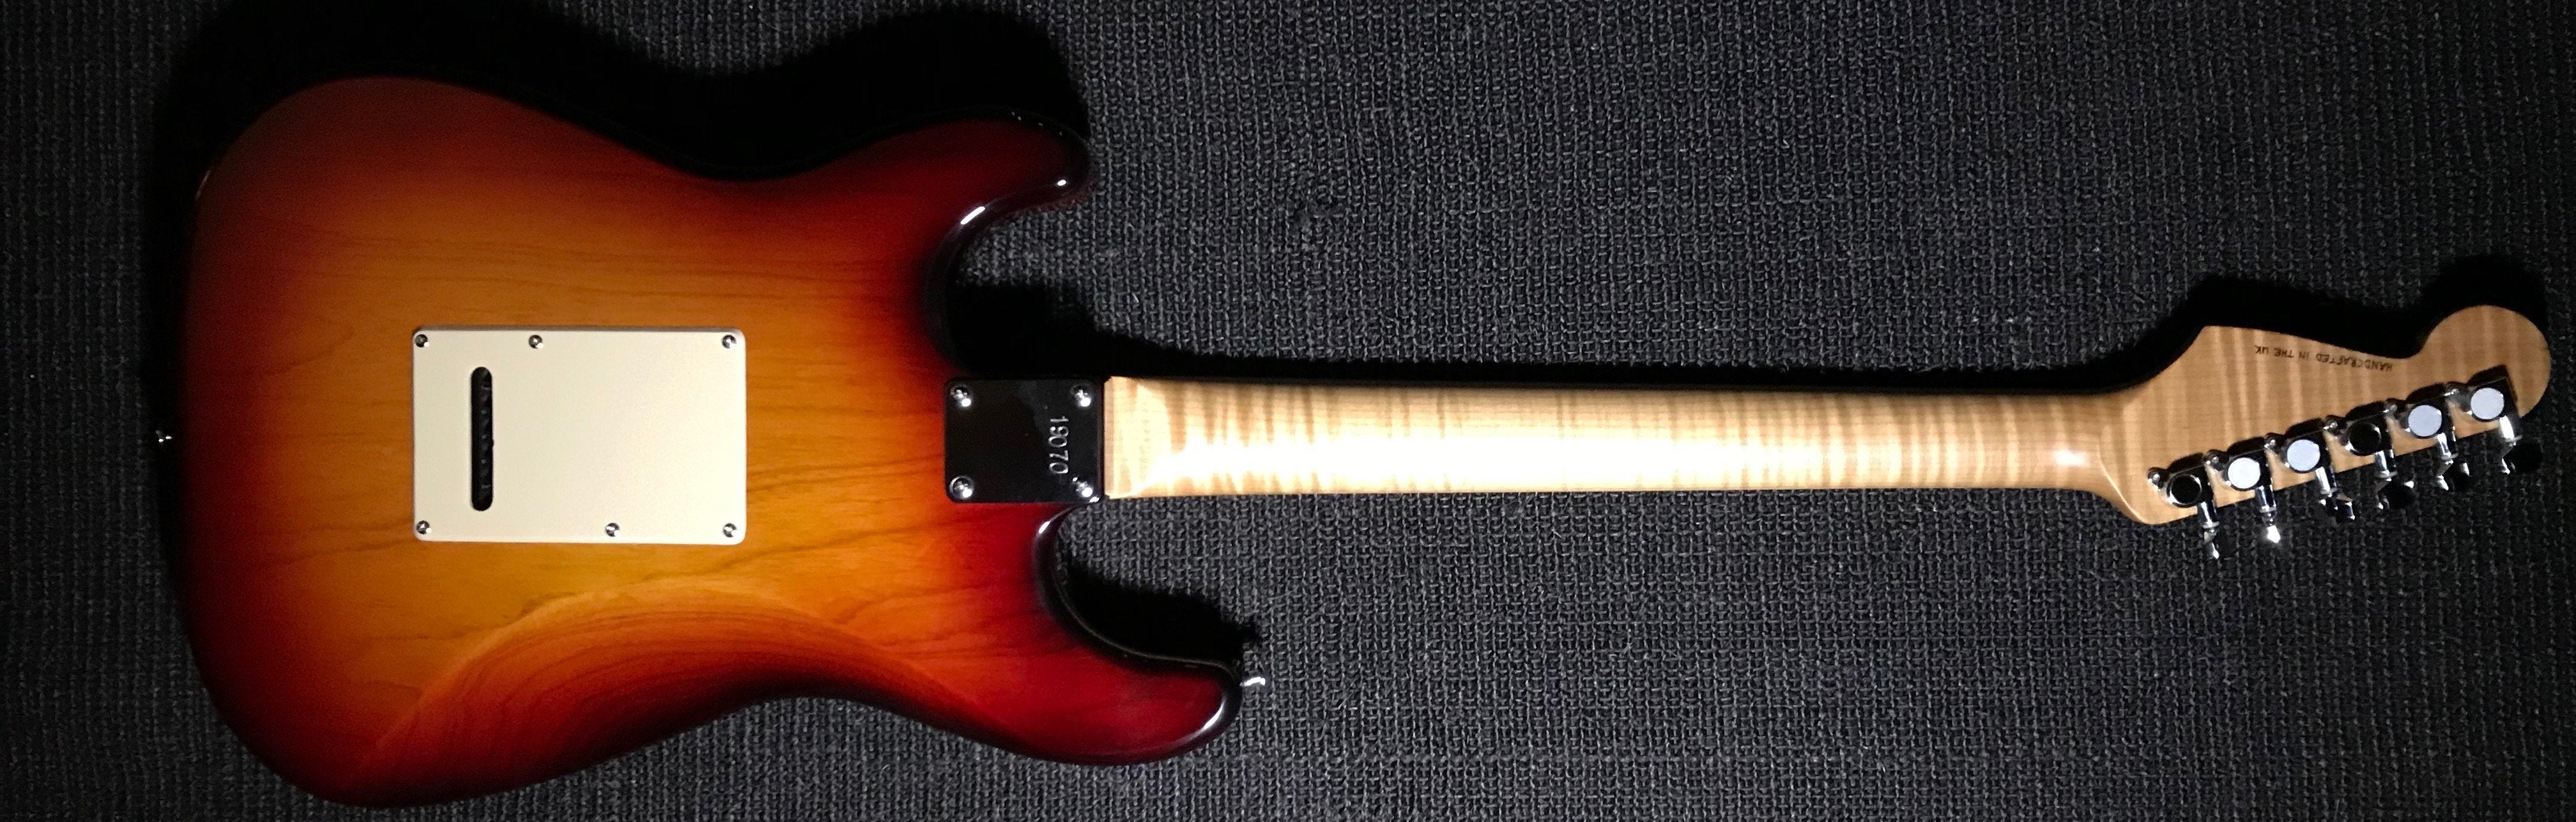 Gordon Classic S Autumn Burst Swamp Ash Custom Left Handed, Electric Guitar for sale at Richards Guitars.